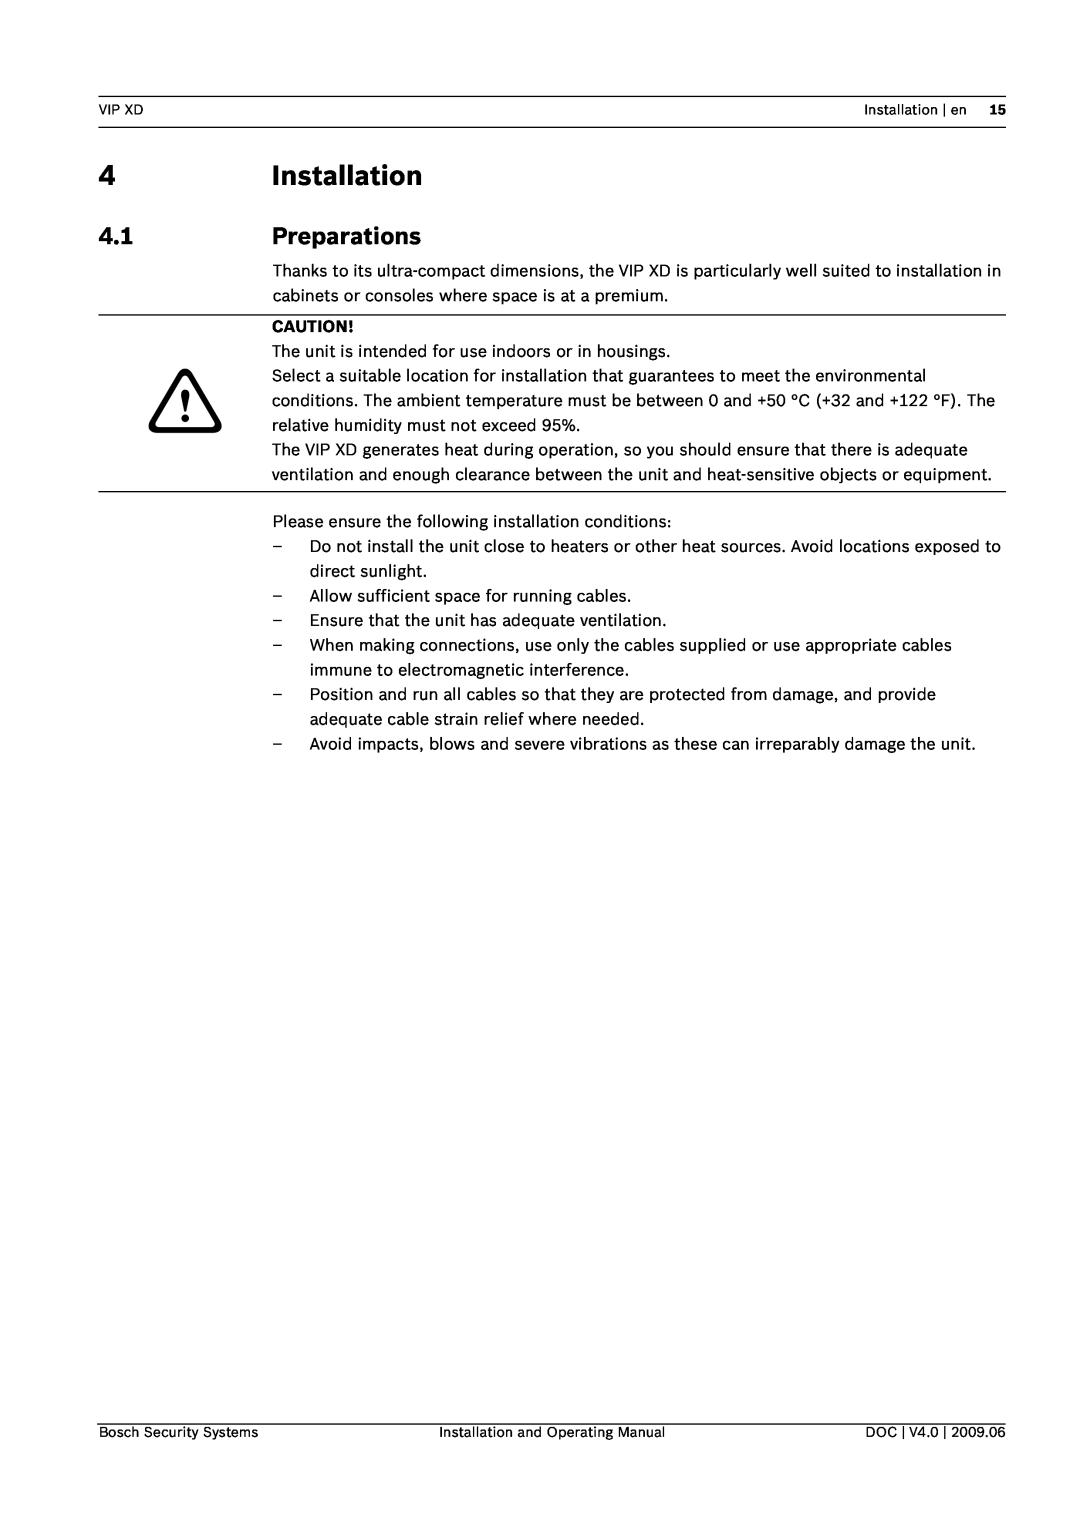 Bosch Appliances VIP, XD manual 4Installation, 4.1Preparations 